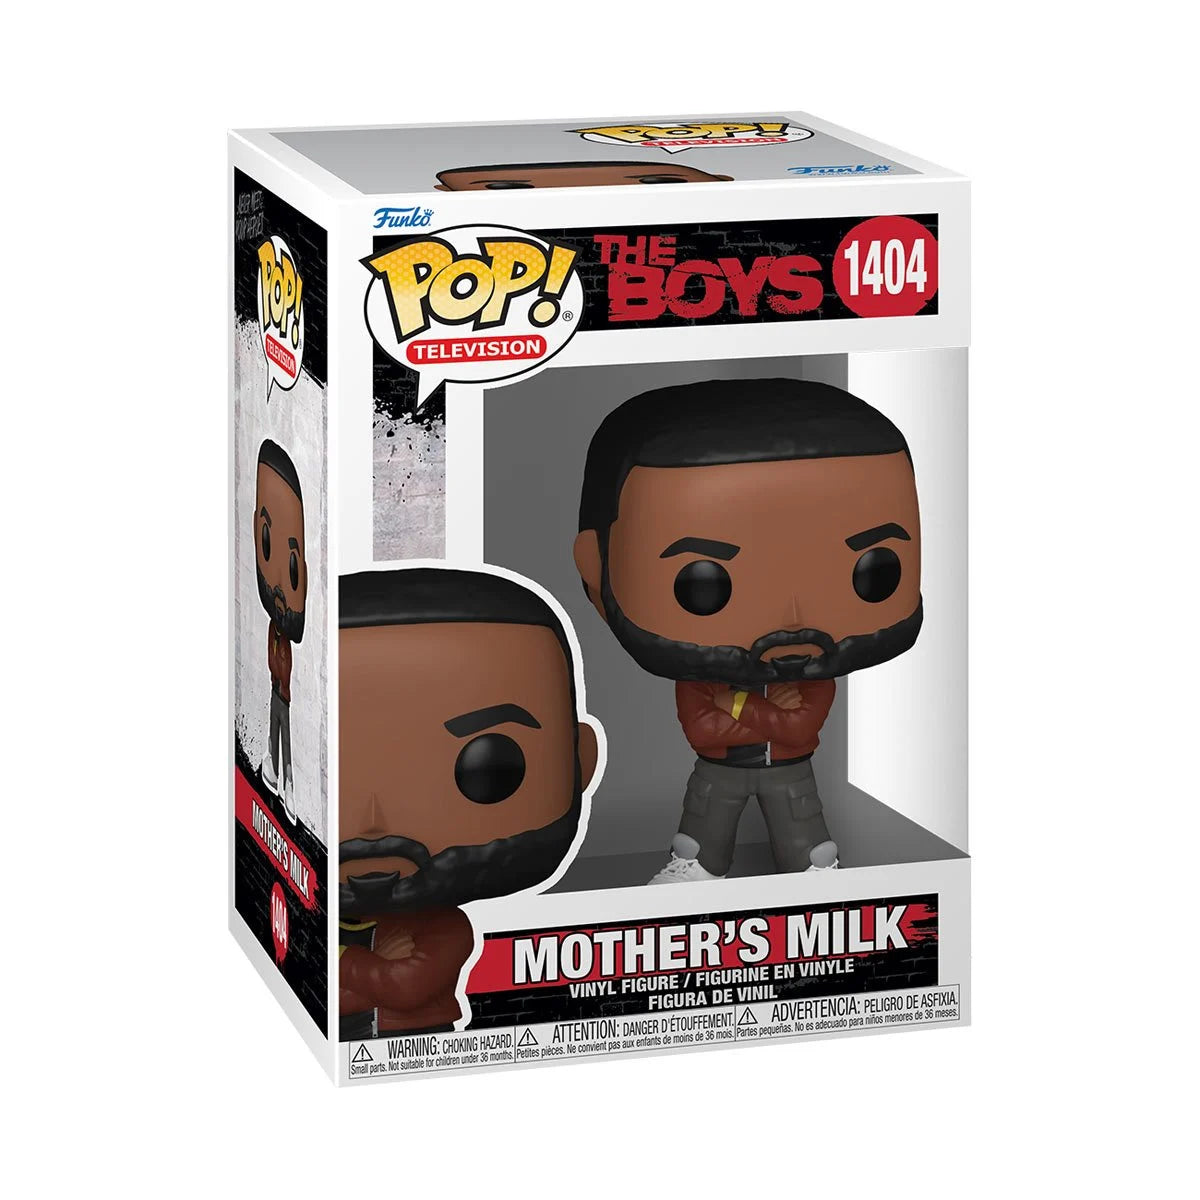 The Boys Mother's Milk Funko Pop!